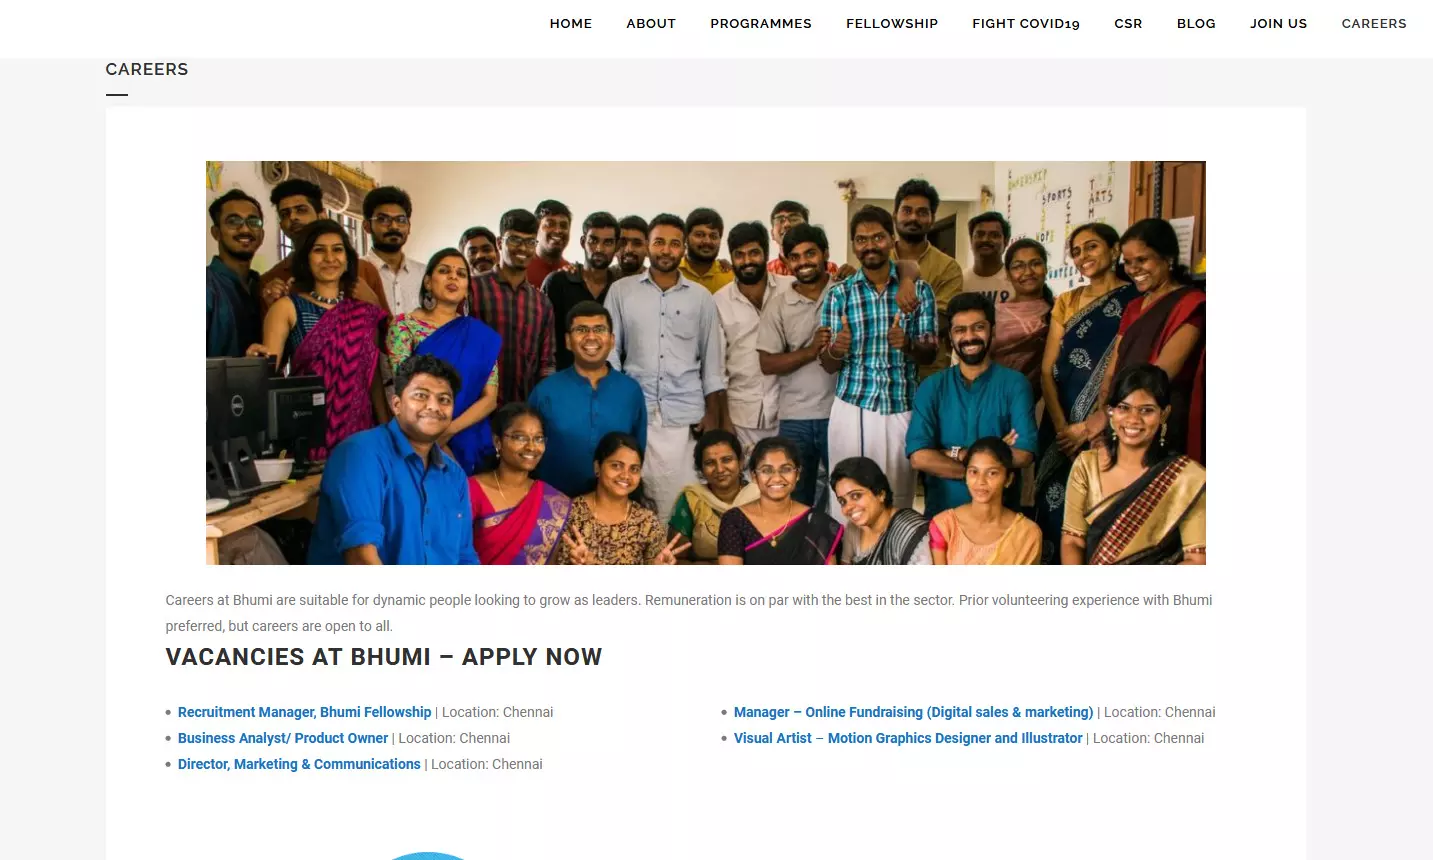 Job Description:  Visual Artist – Motion Graphics Designer and Illustrator  Location: Chennai